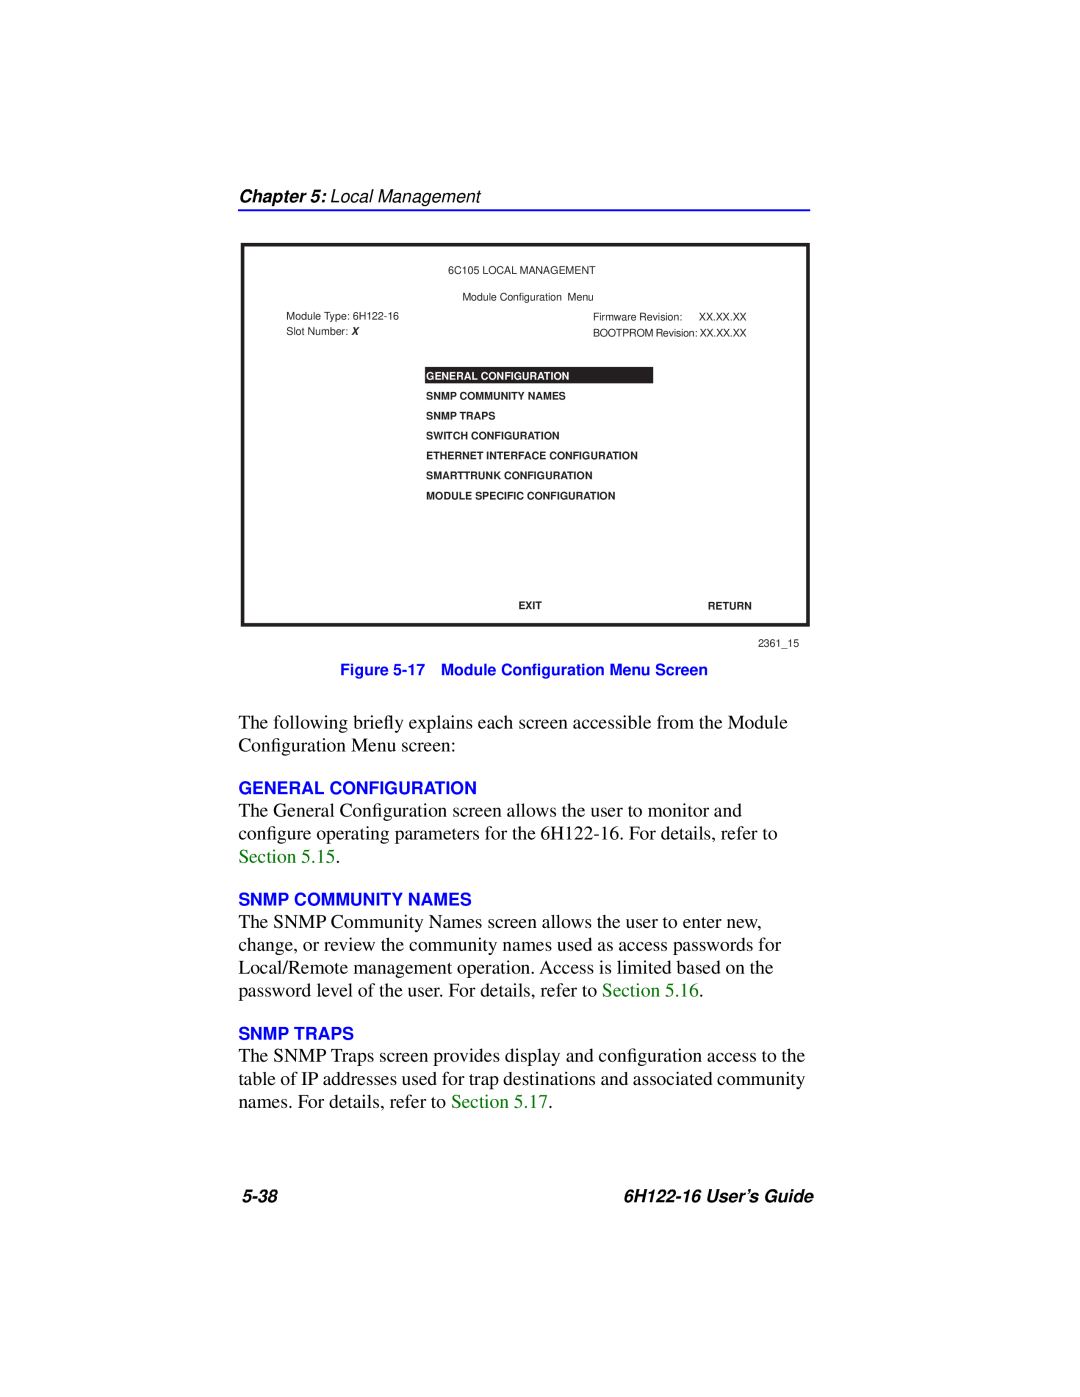 Cabletron Systems 6H122-16 manual 17 Module Conﬁguration Menu Screen, General Configuration 